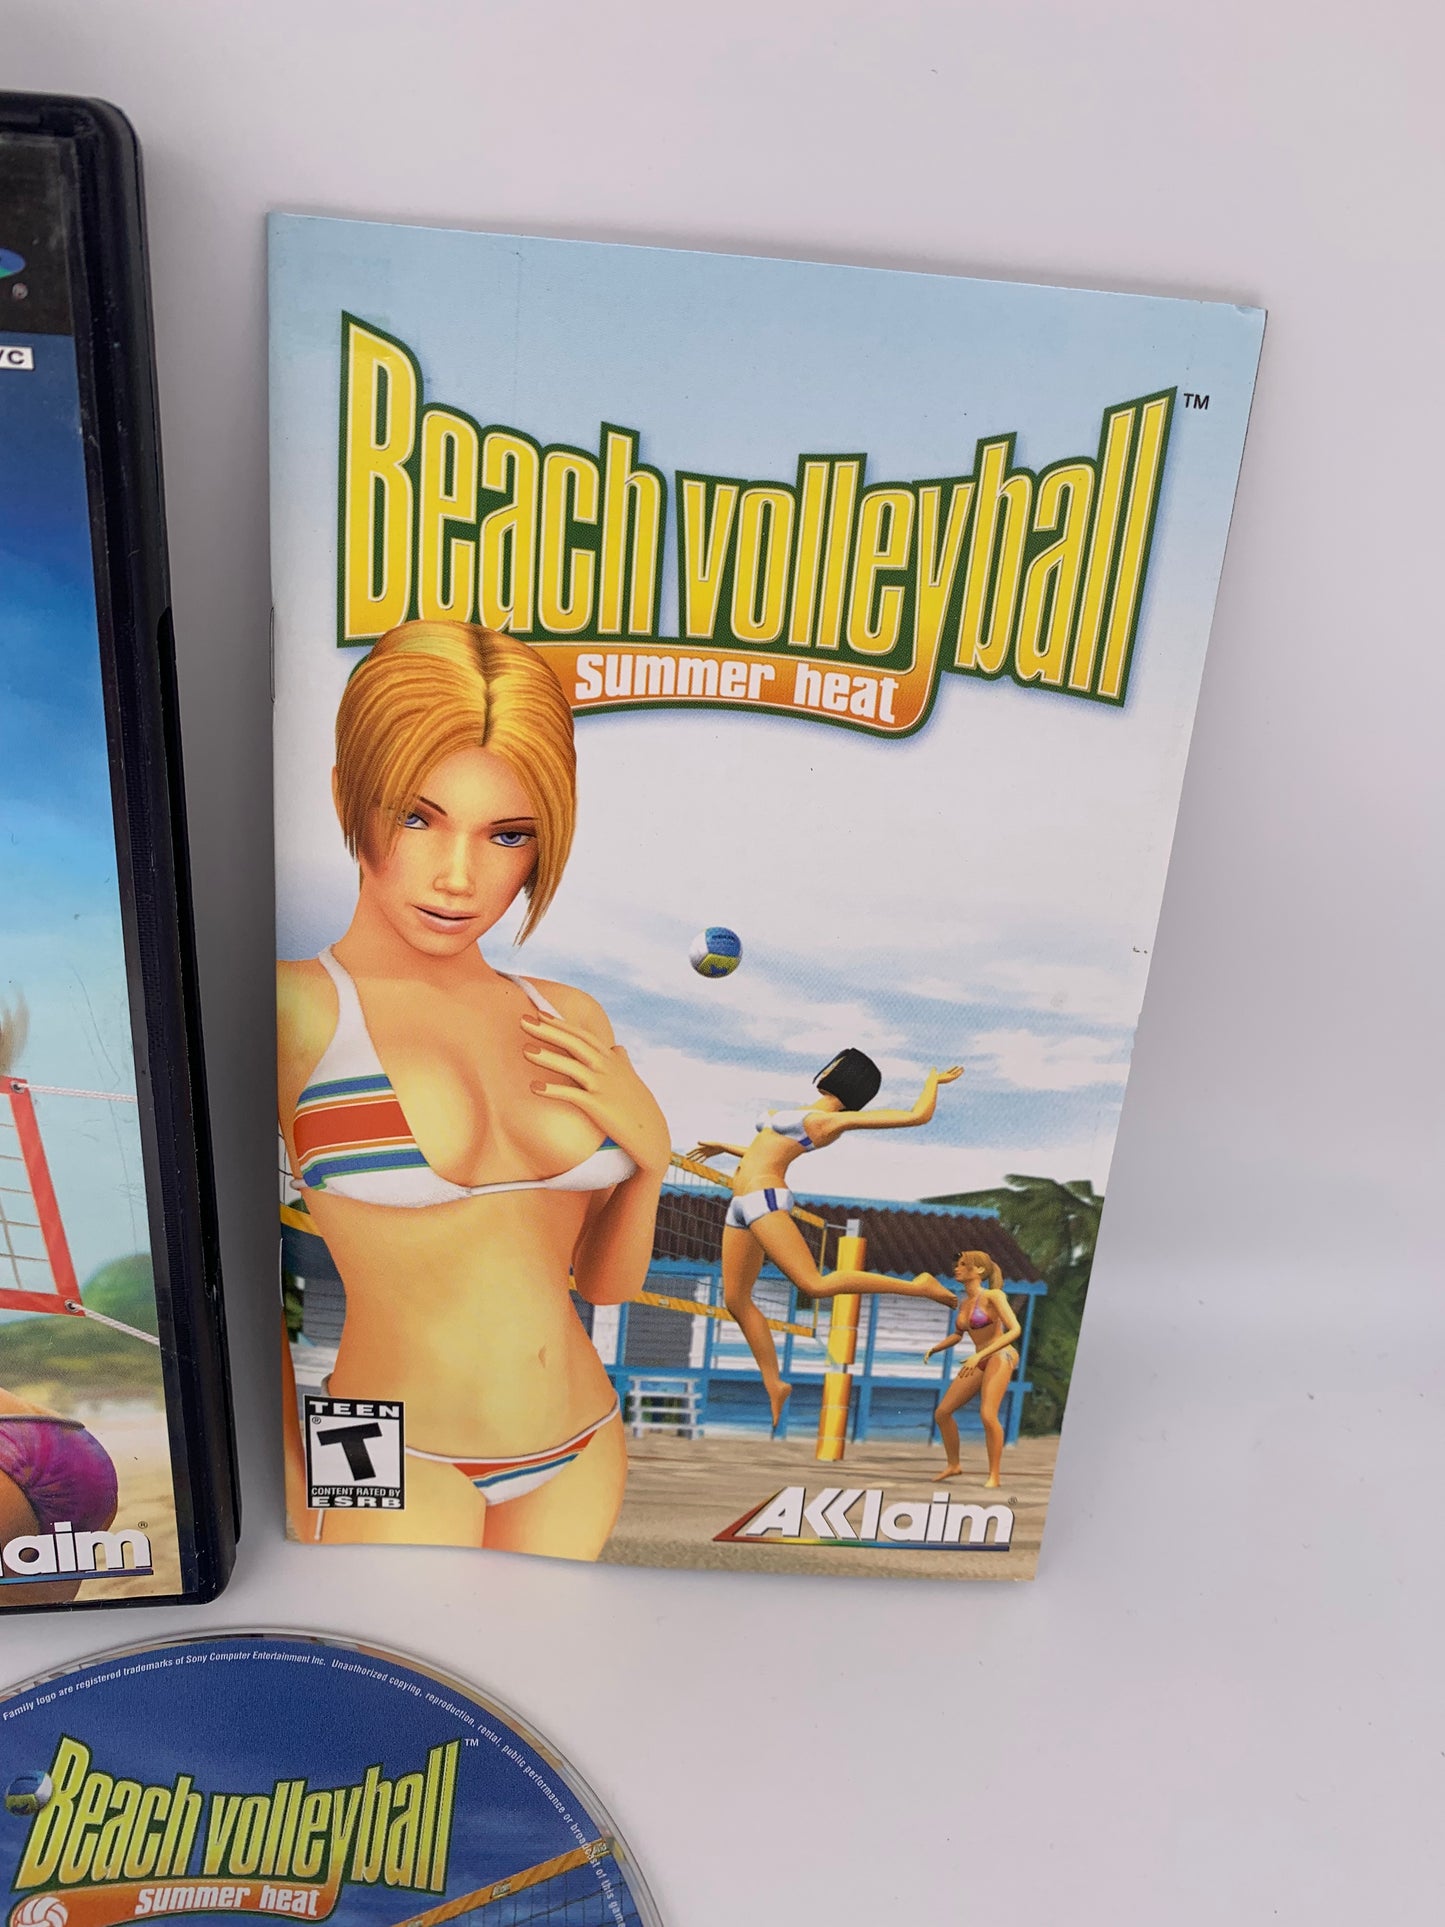 SONY PLAYSTATiON 2 [PS2] | BEACH VOLLEYBALL SUMMER HEAT